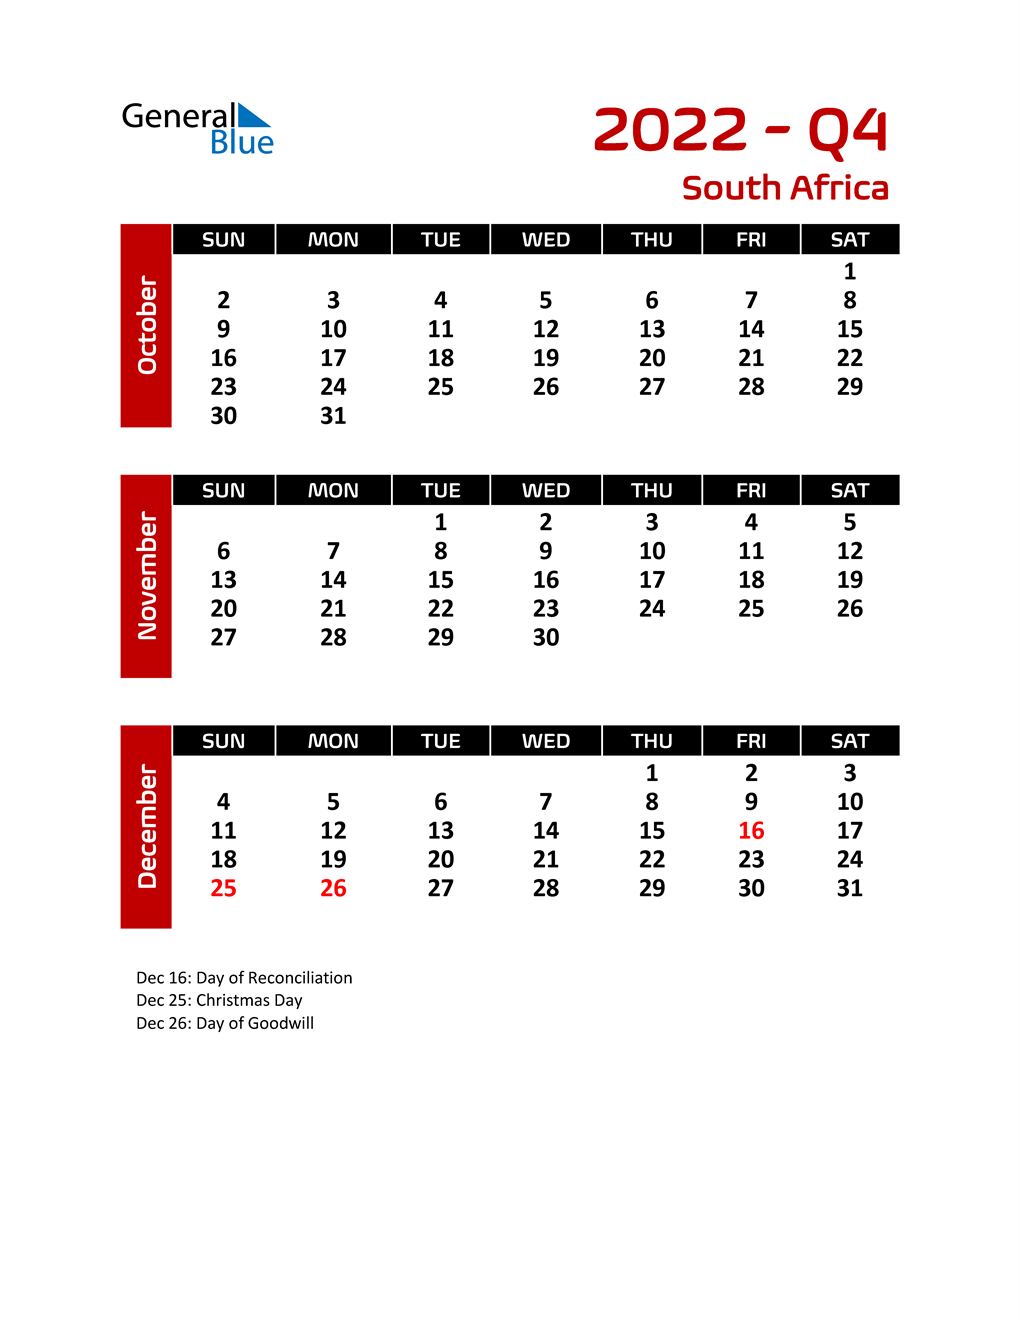 Goodwill Calendar 2022 Q4 2022 Quarterly Calendar For South Africa